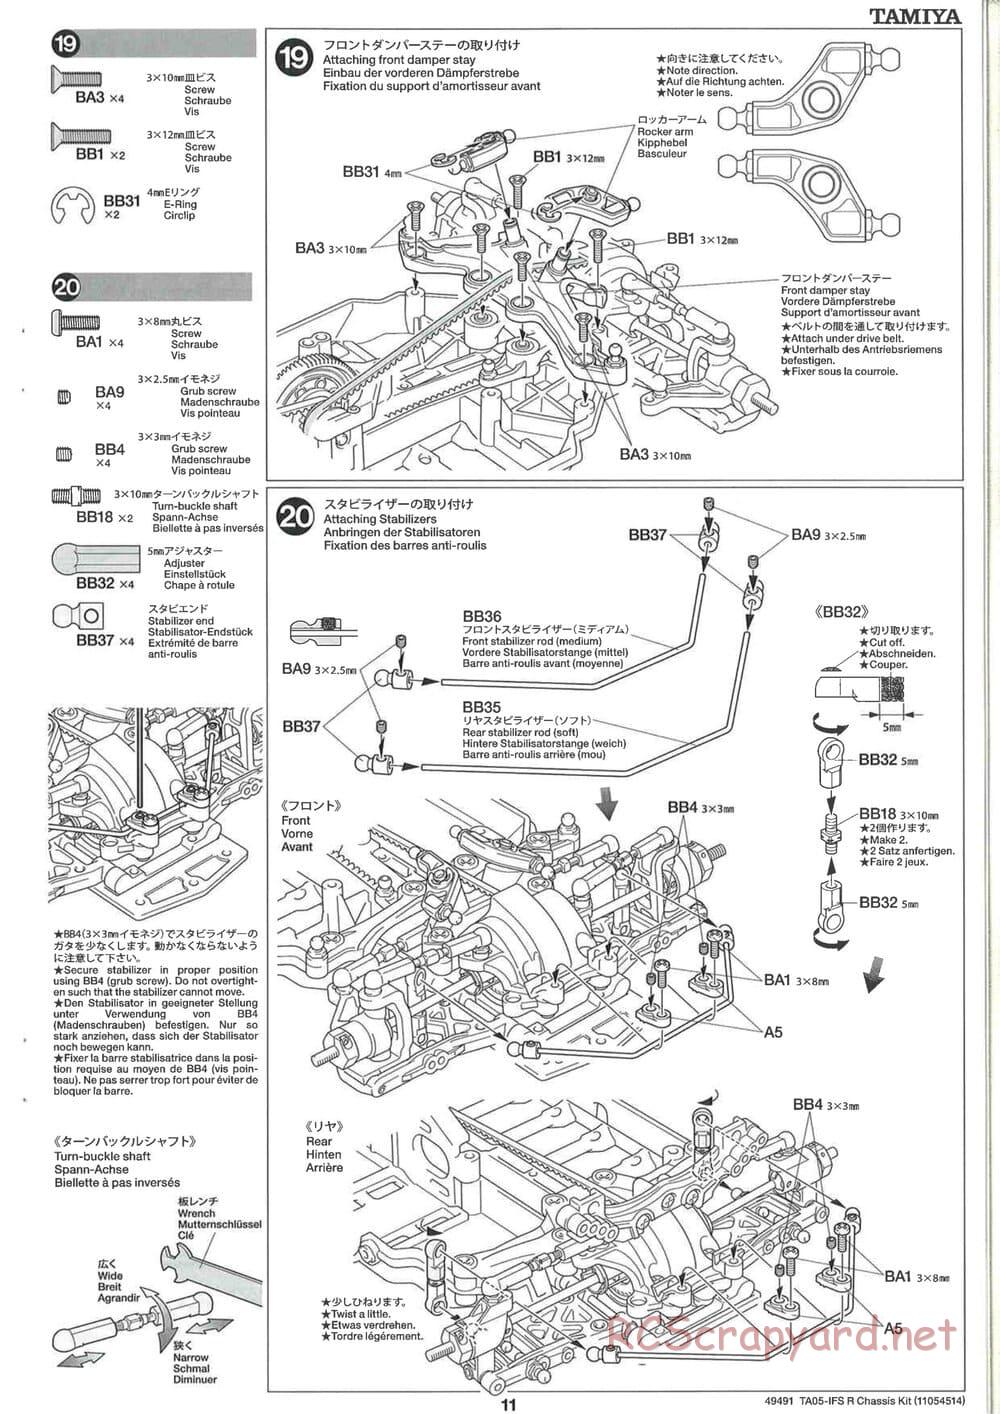 Tamiya - TA05-IFS R Chassis - Manual - Page 11